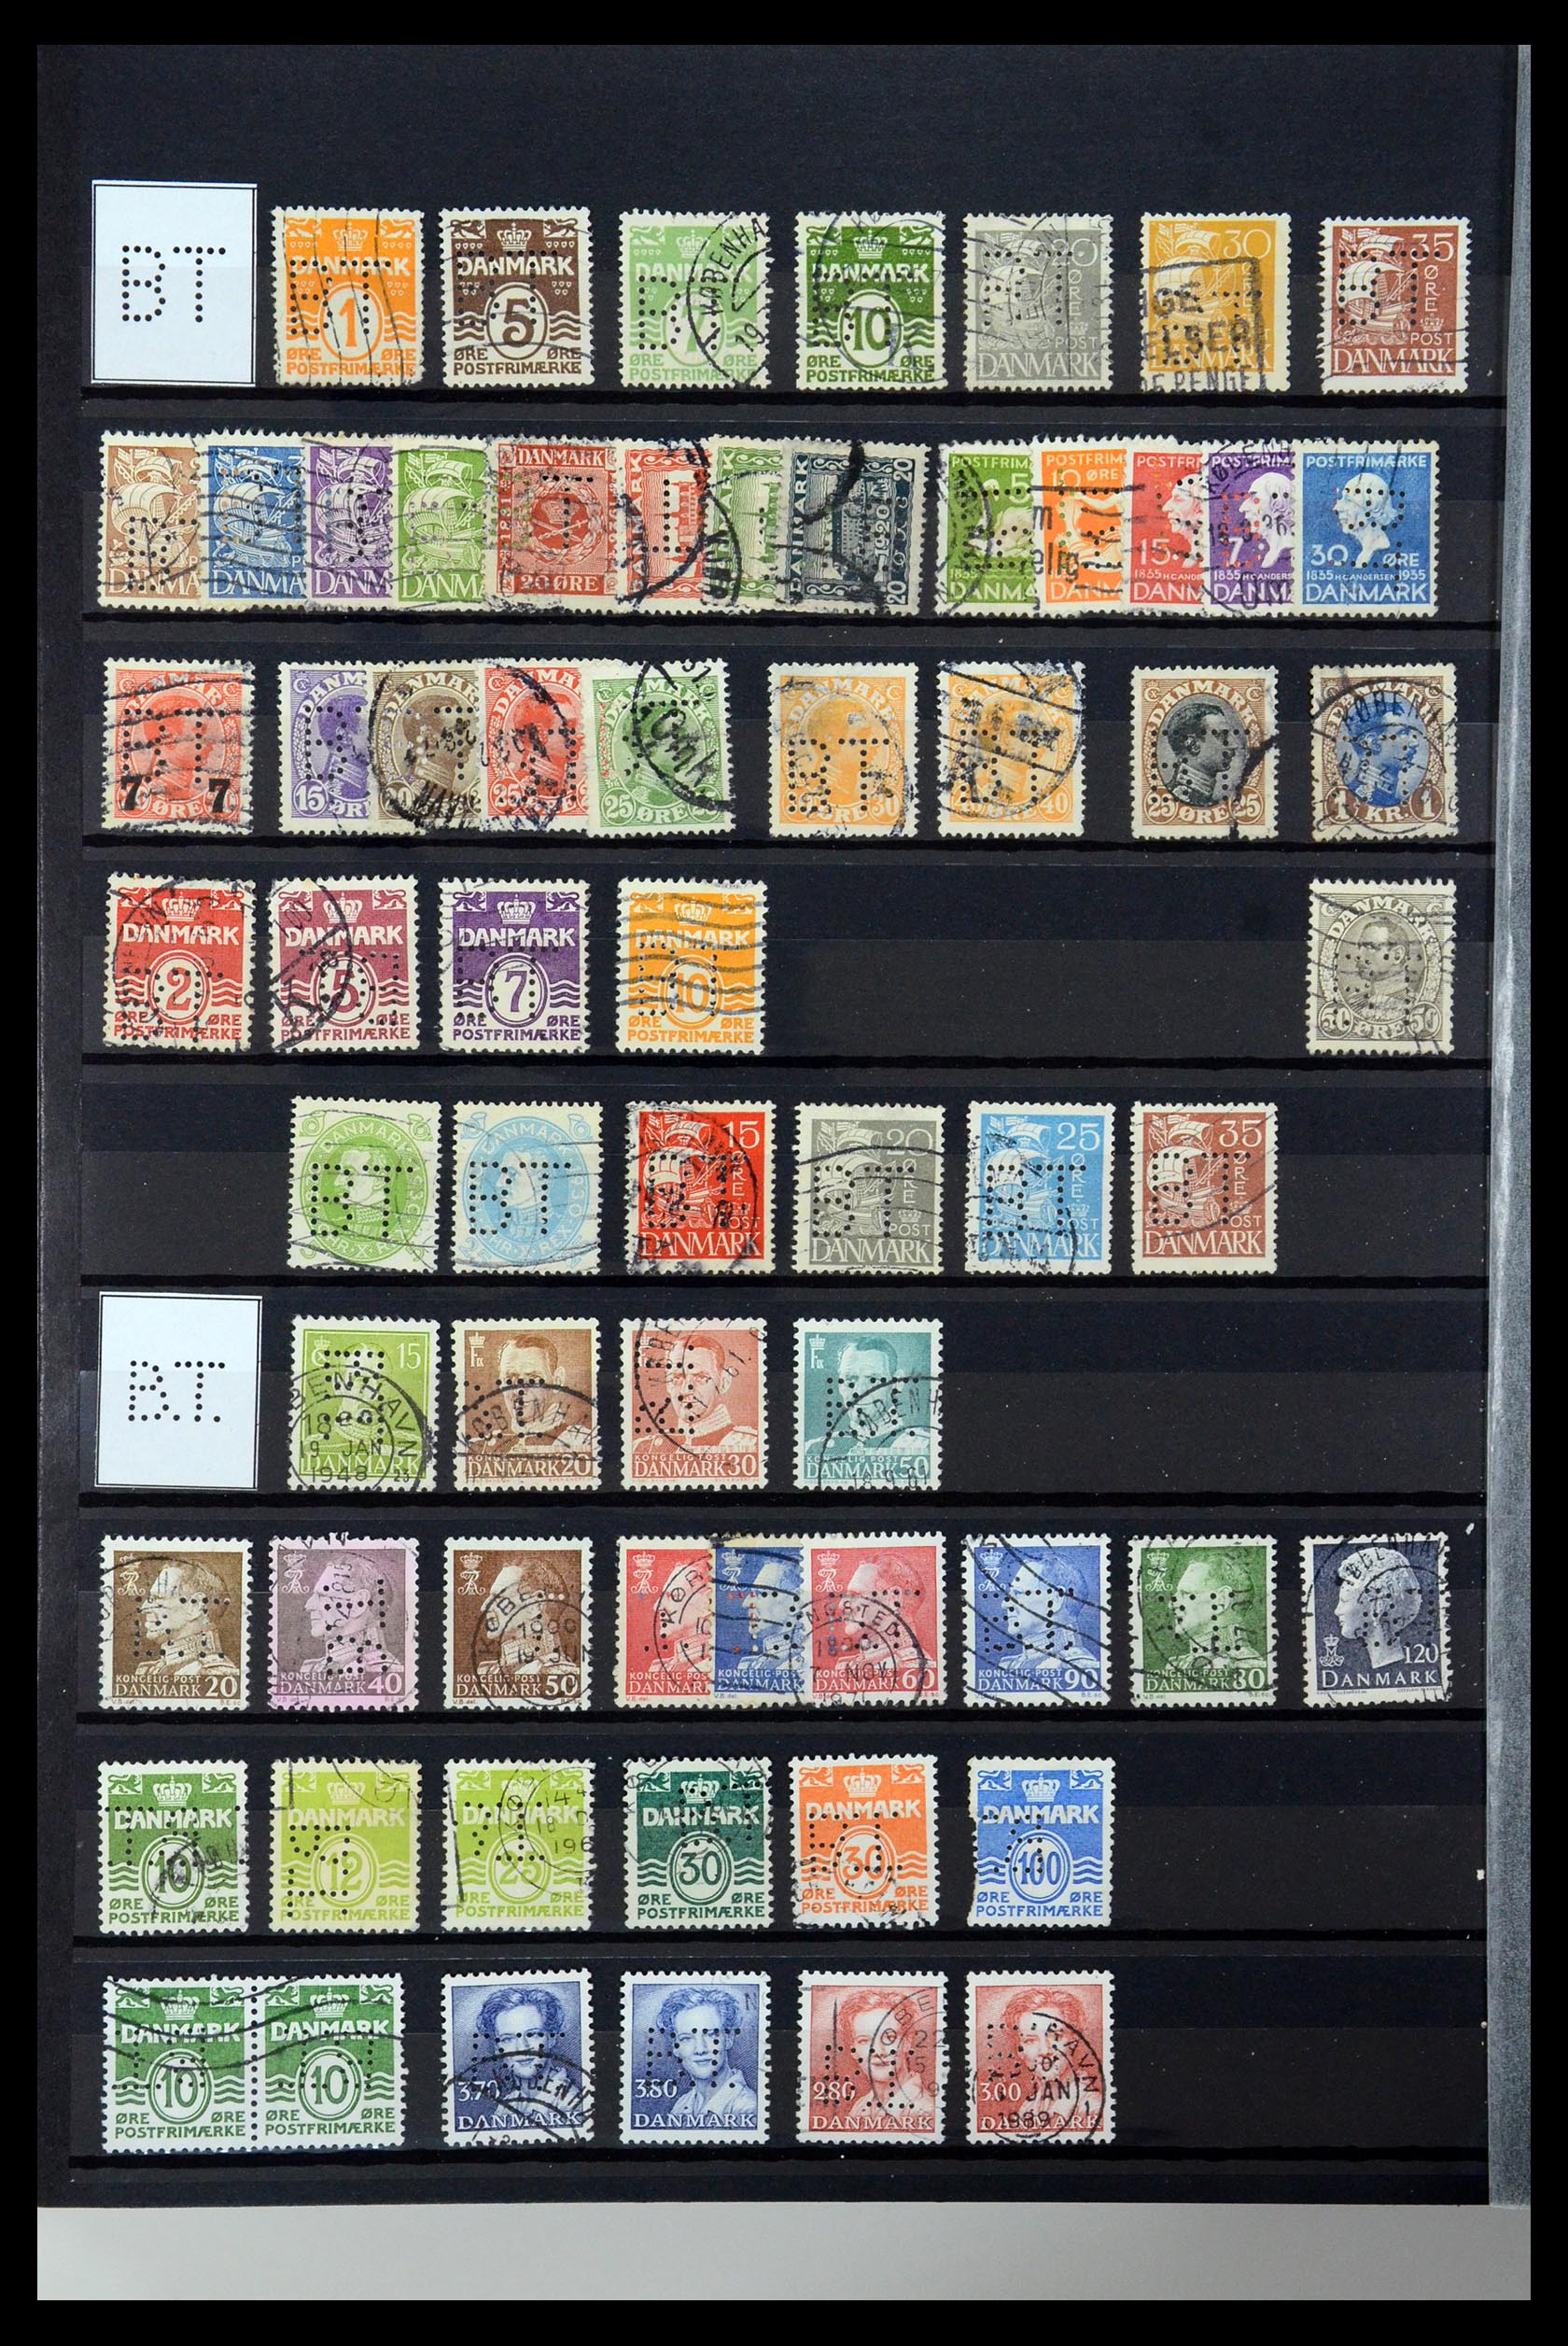 36396 020 - Stamp collection 36396 Denmark perfins.